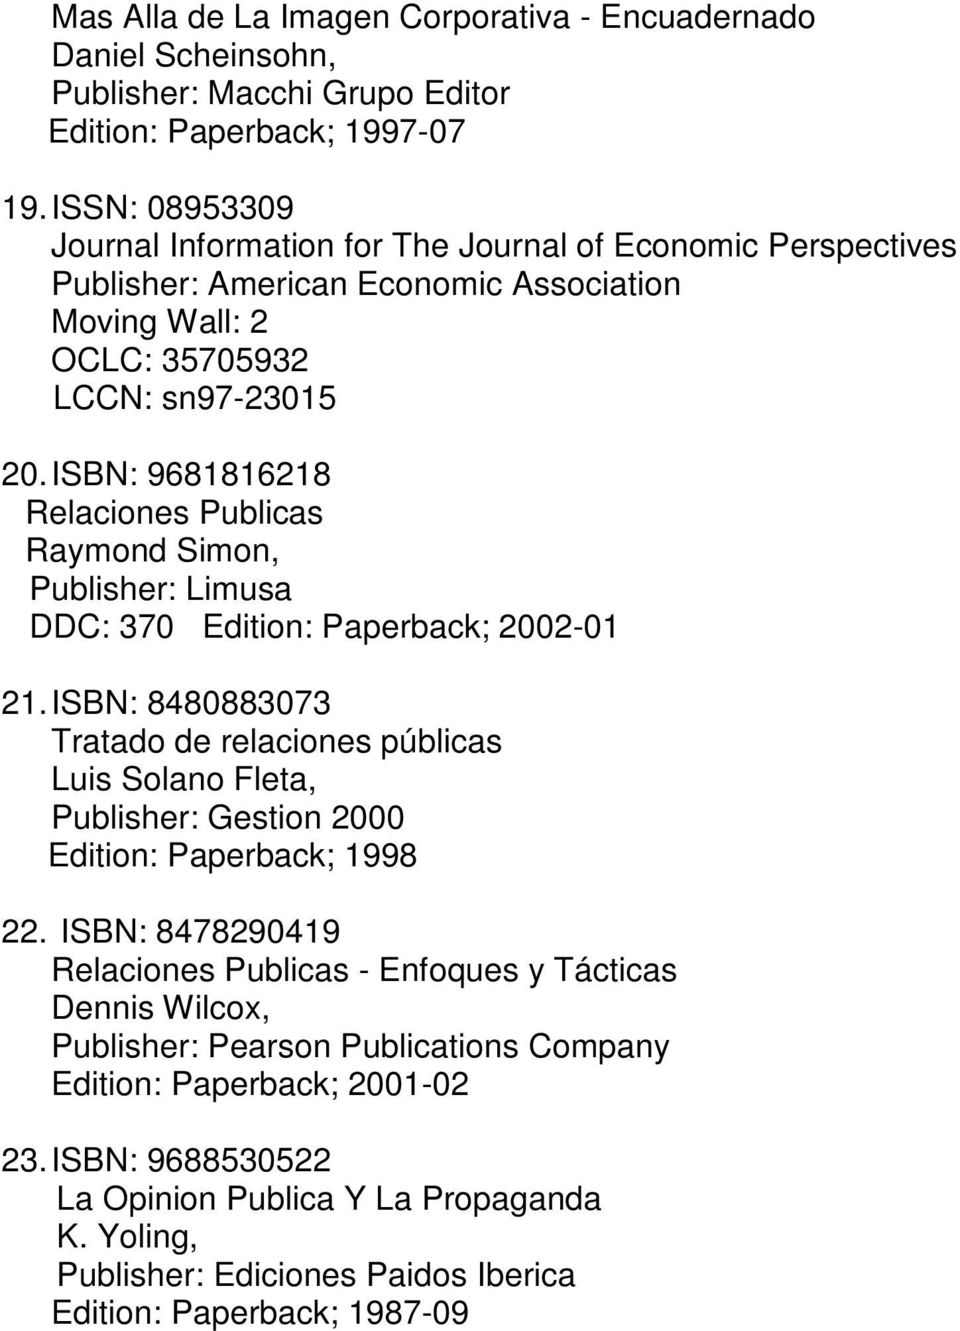 ISBN: 9681816218 Relaciones Publicas Raymond Simon, Publisher: Limusa DDC: 370 Edition: Paperback; 2002-01 21.